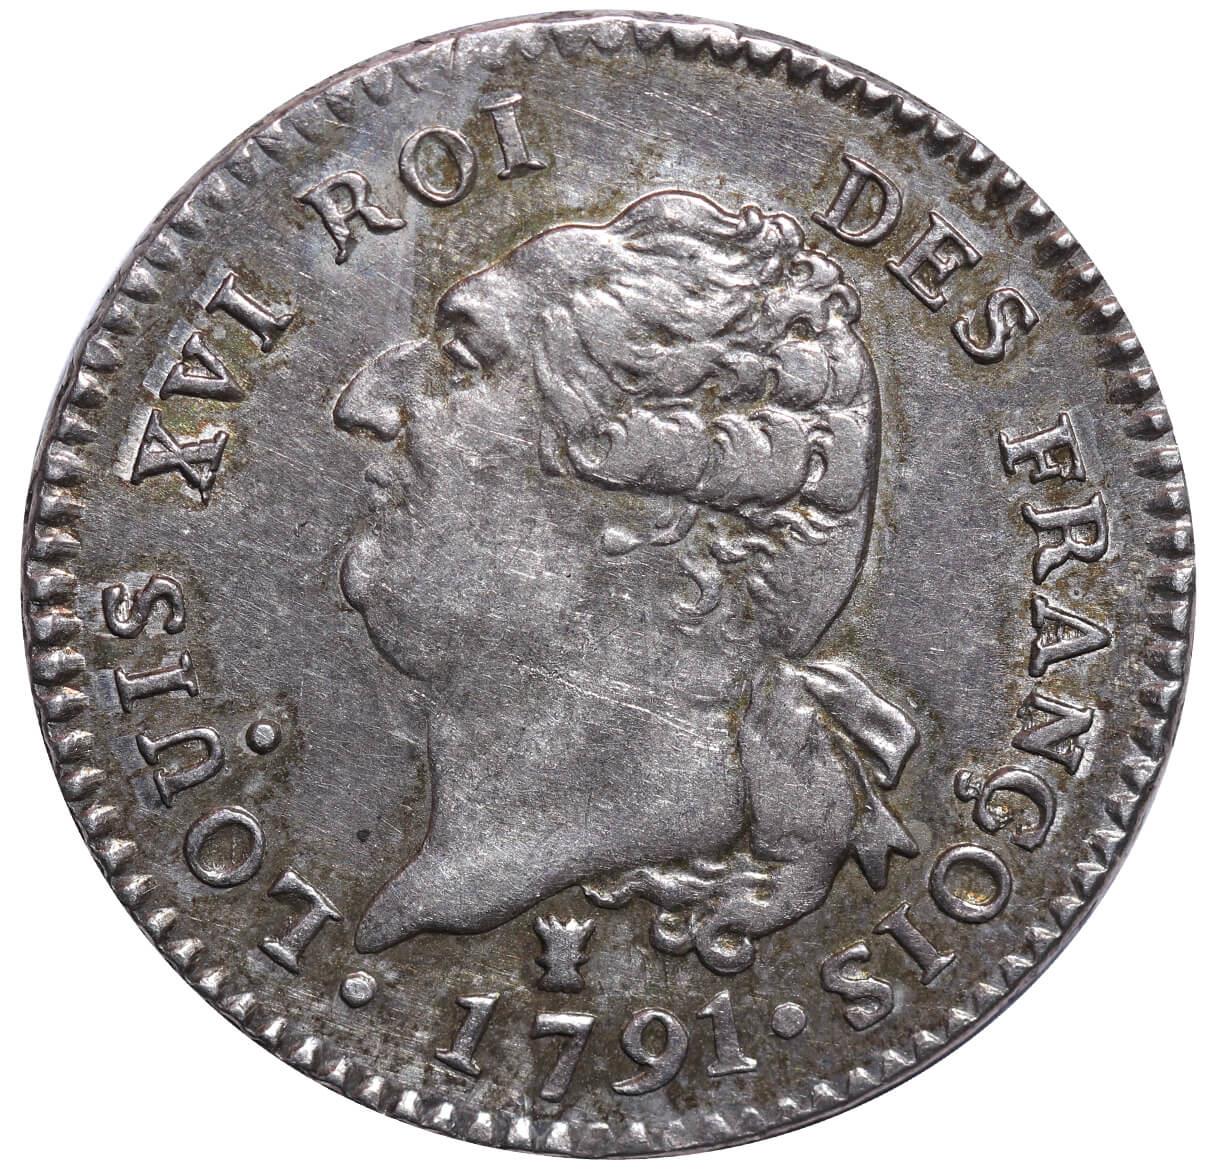 France, 30 Sols, 1791 year, I - Image 2 of 3